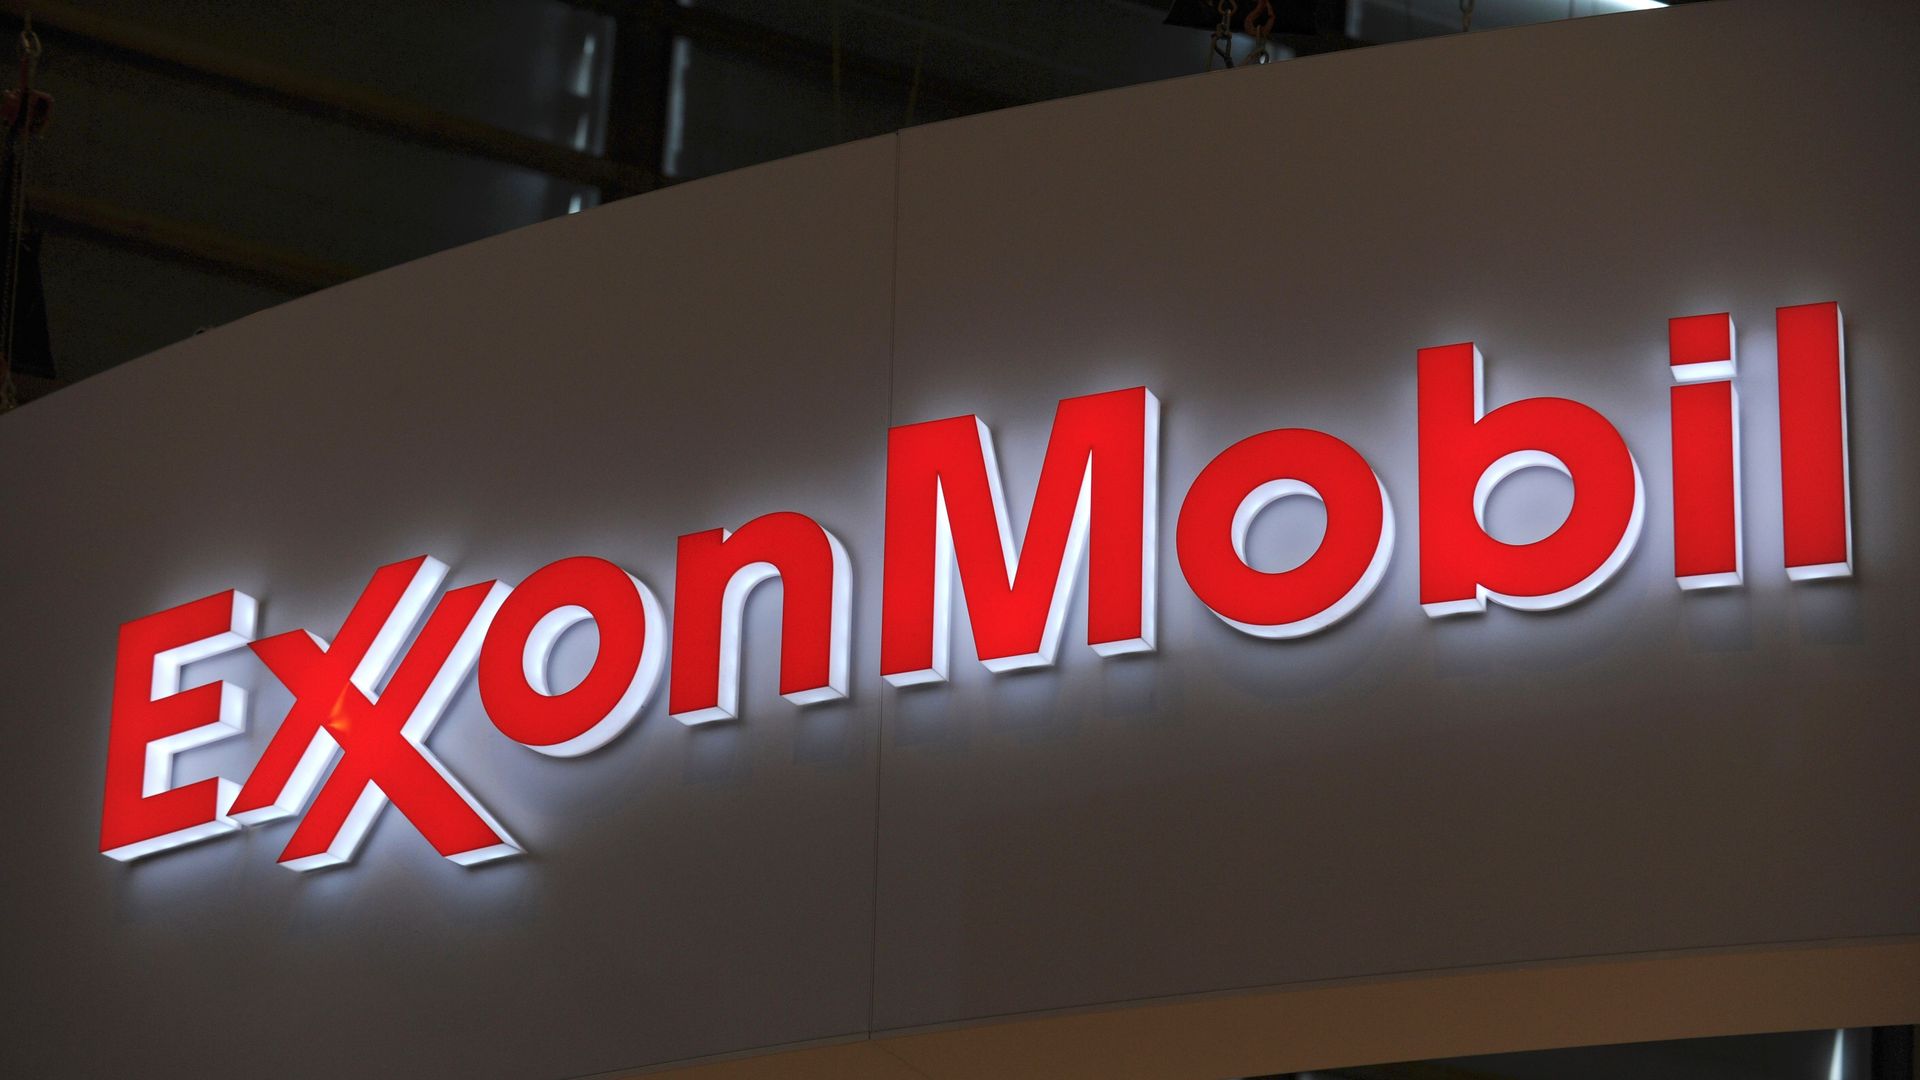 ExxonMobil sign lit up at night